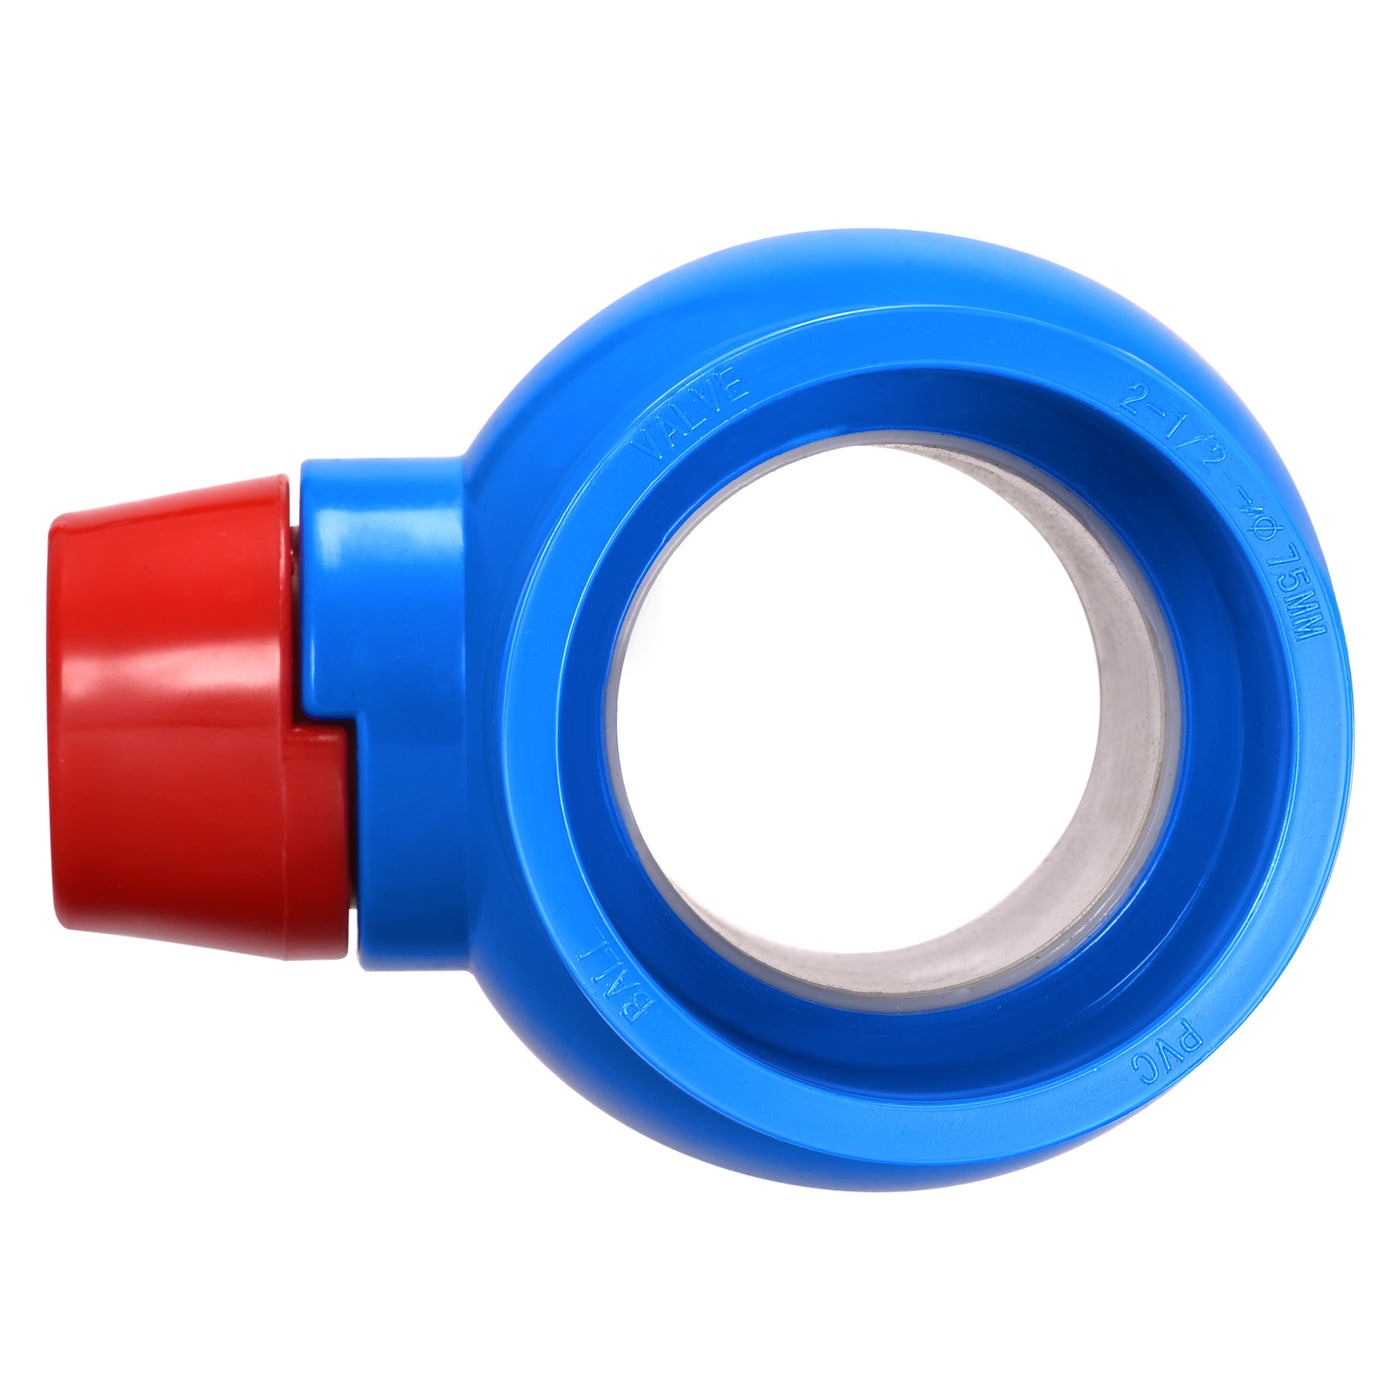 uxcell Uxcell Ball Valve, 2-1/2" Slip PVC Socket End Valve for Aquarium Setup, Sump Pump, Pool, Garden Sprinkler Blue Red